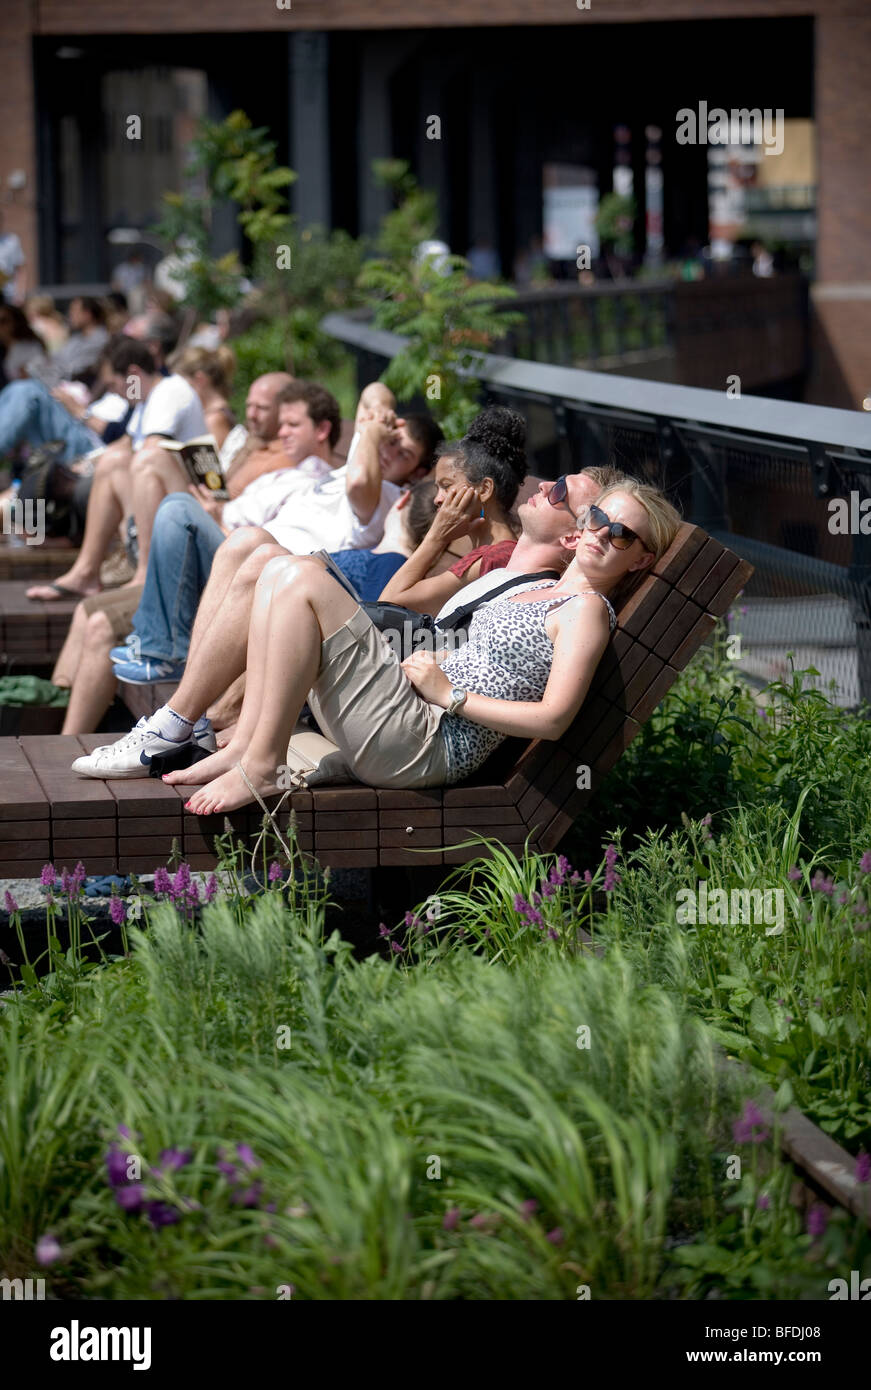 Highline park opens in Manhattan Stock Photo